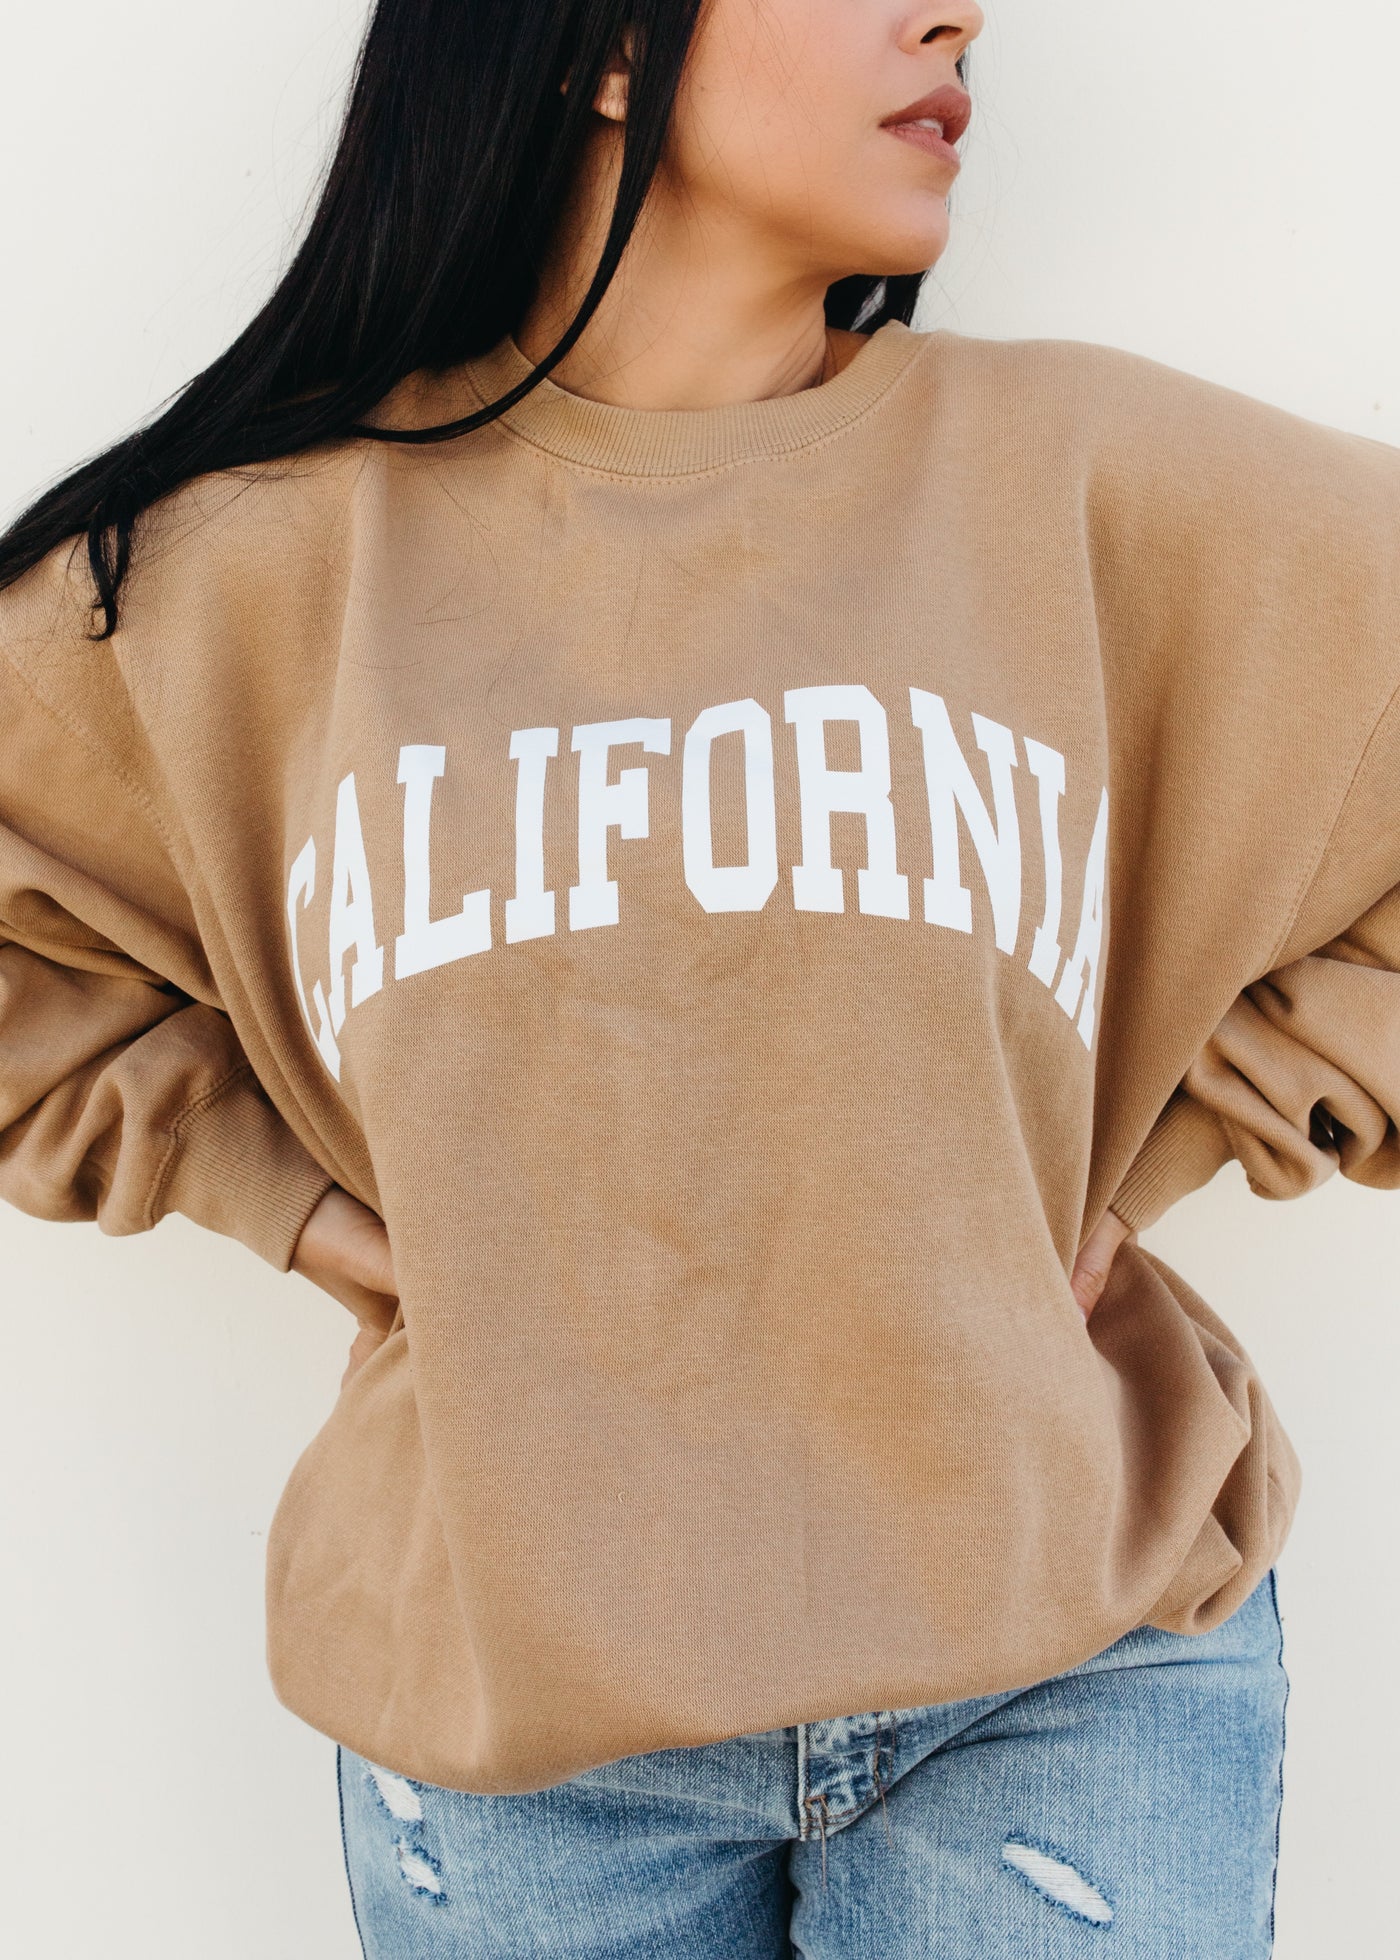 California - Crew Neck Sweater